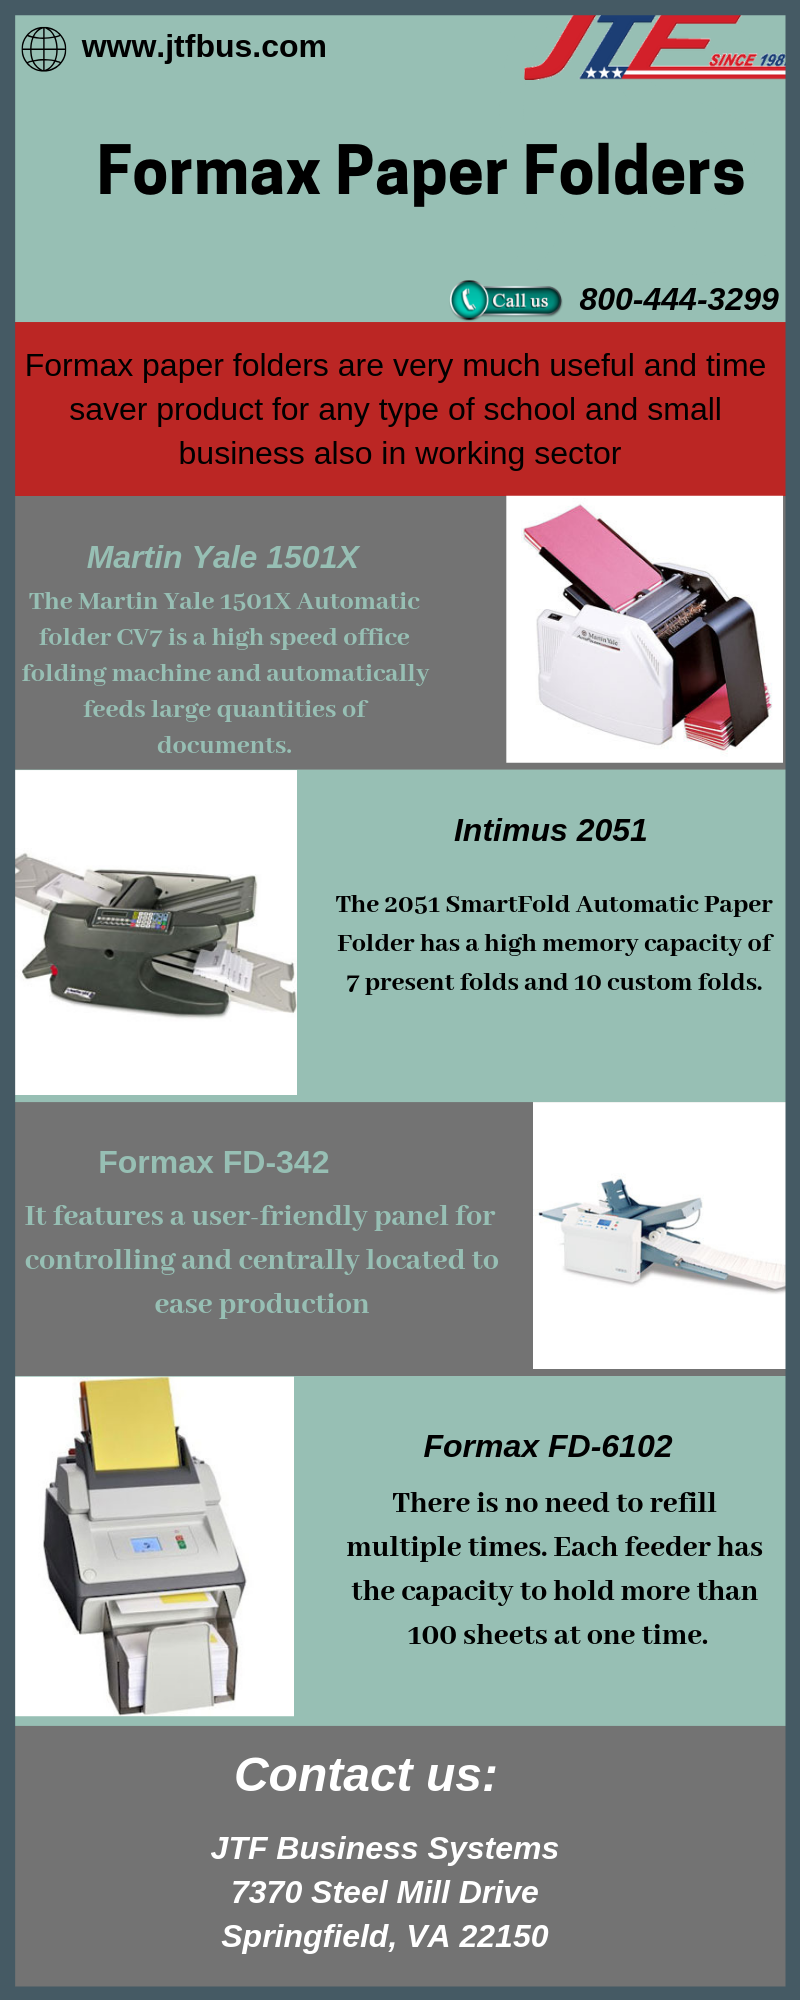 formax paper folder